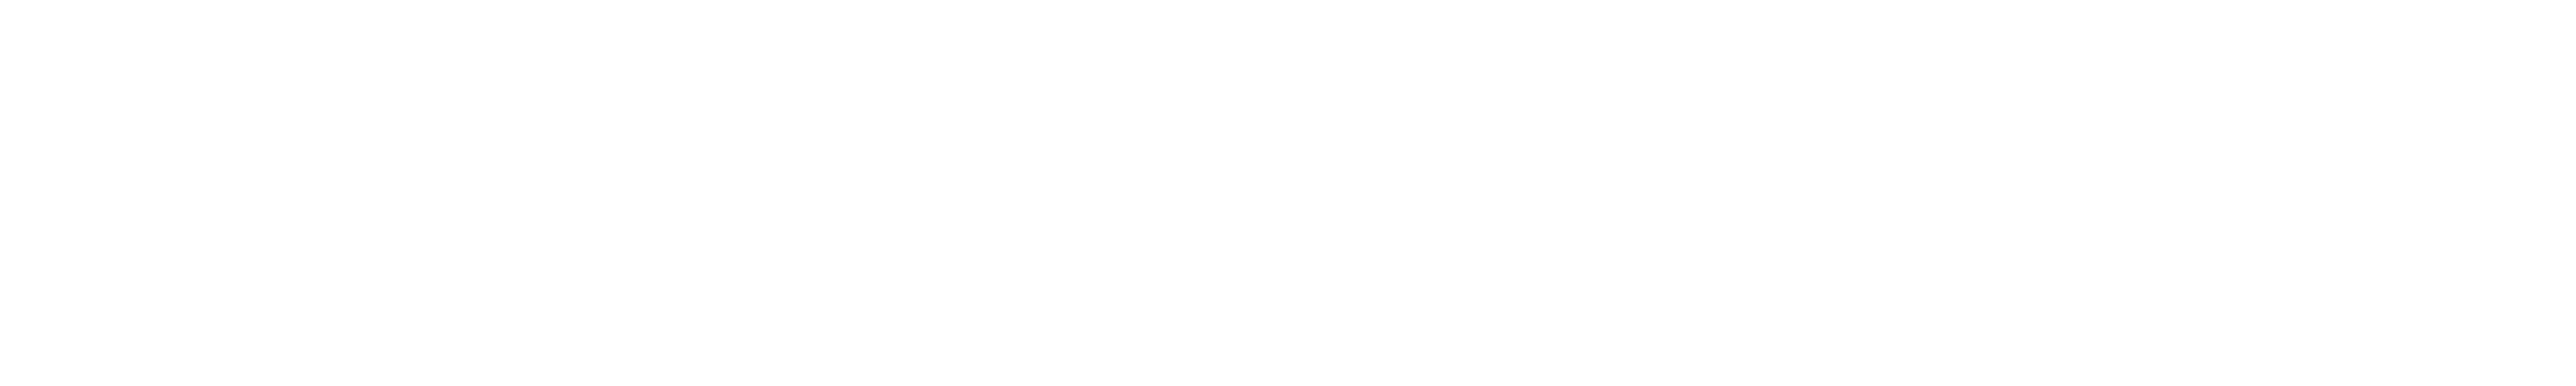 perfect-practice-transparent-white-logo